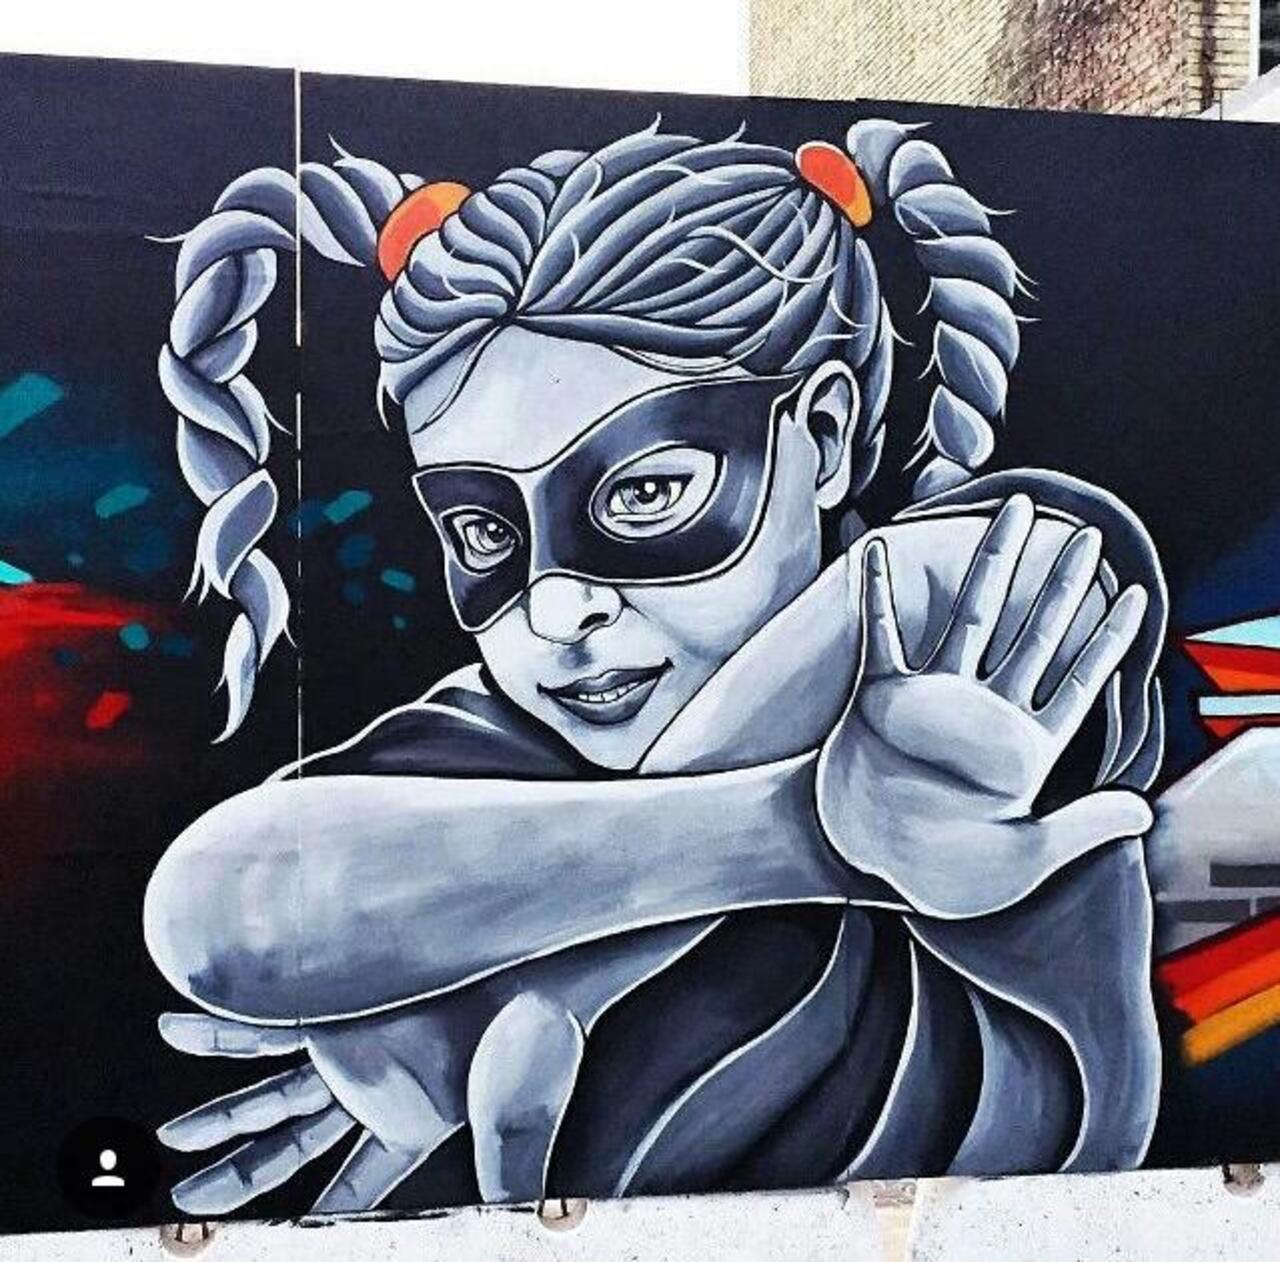 RT belilac "RT belilac "RT belilac "RT belilac "Street Art by Stinehvid 

#art #graffiti #mural #streetart http://t.co/HgV0qG5l1Y""""